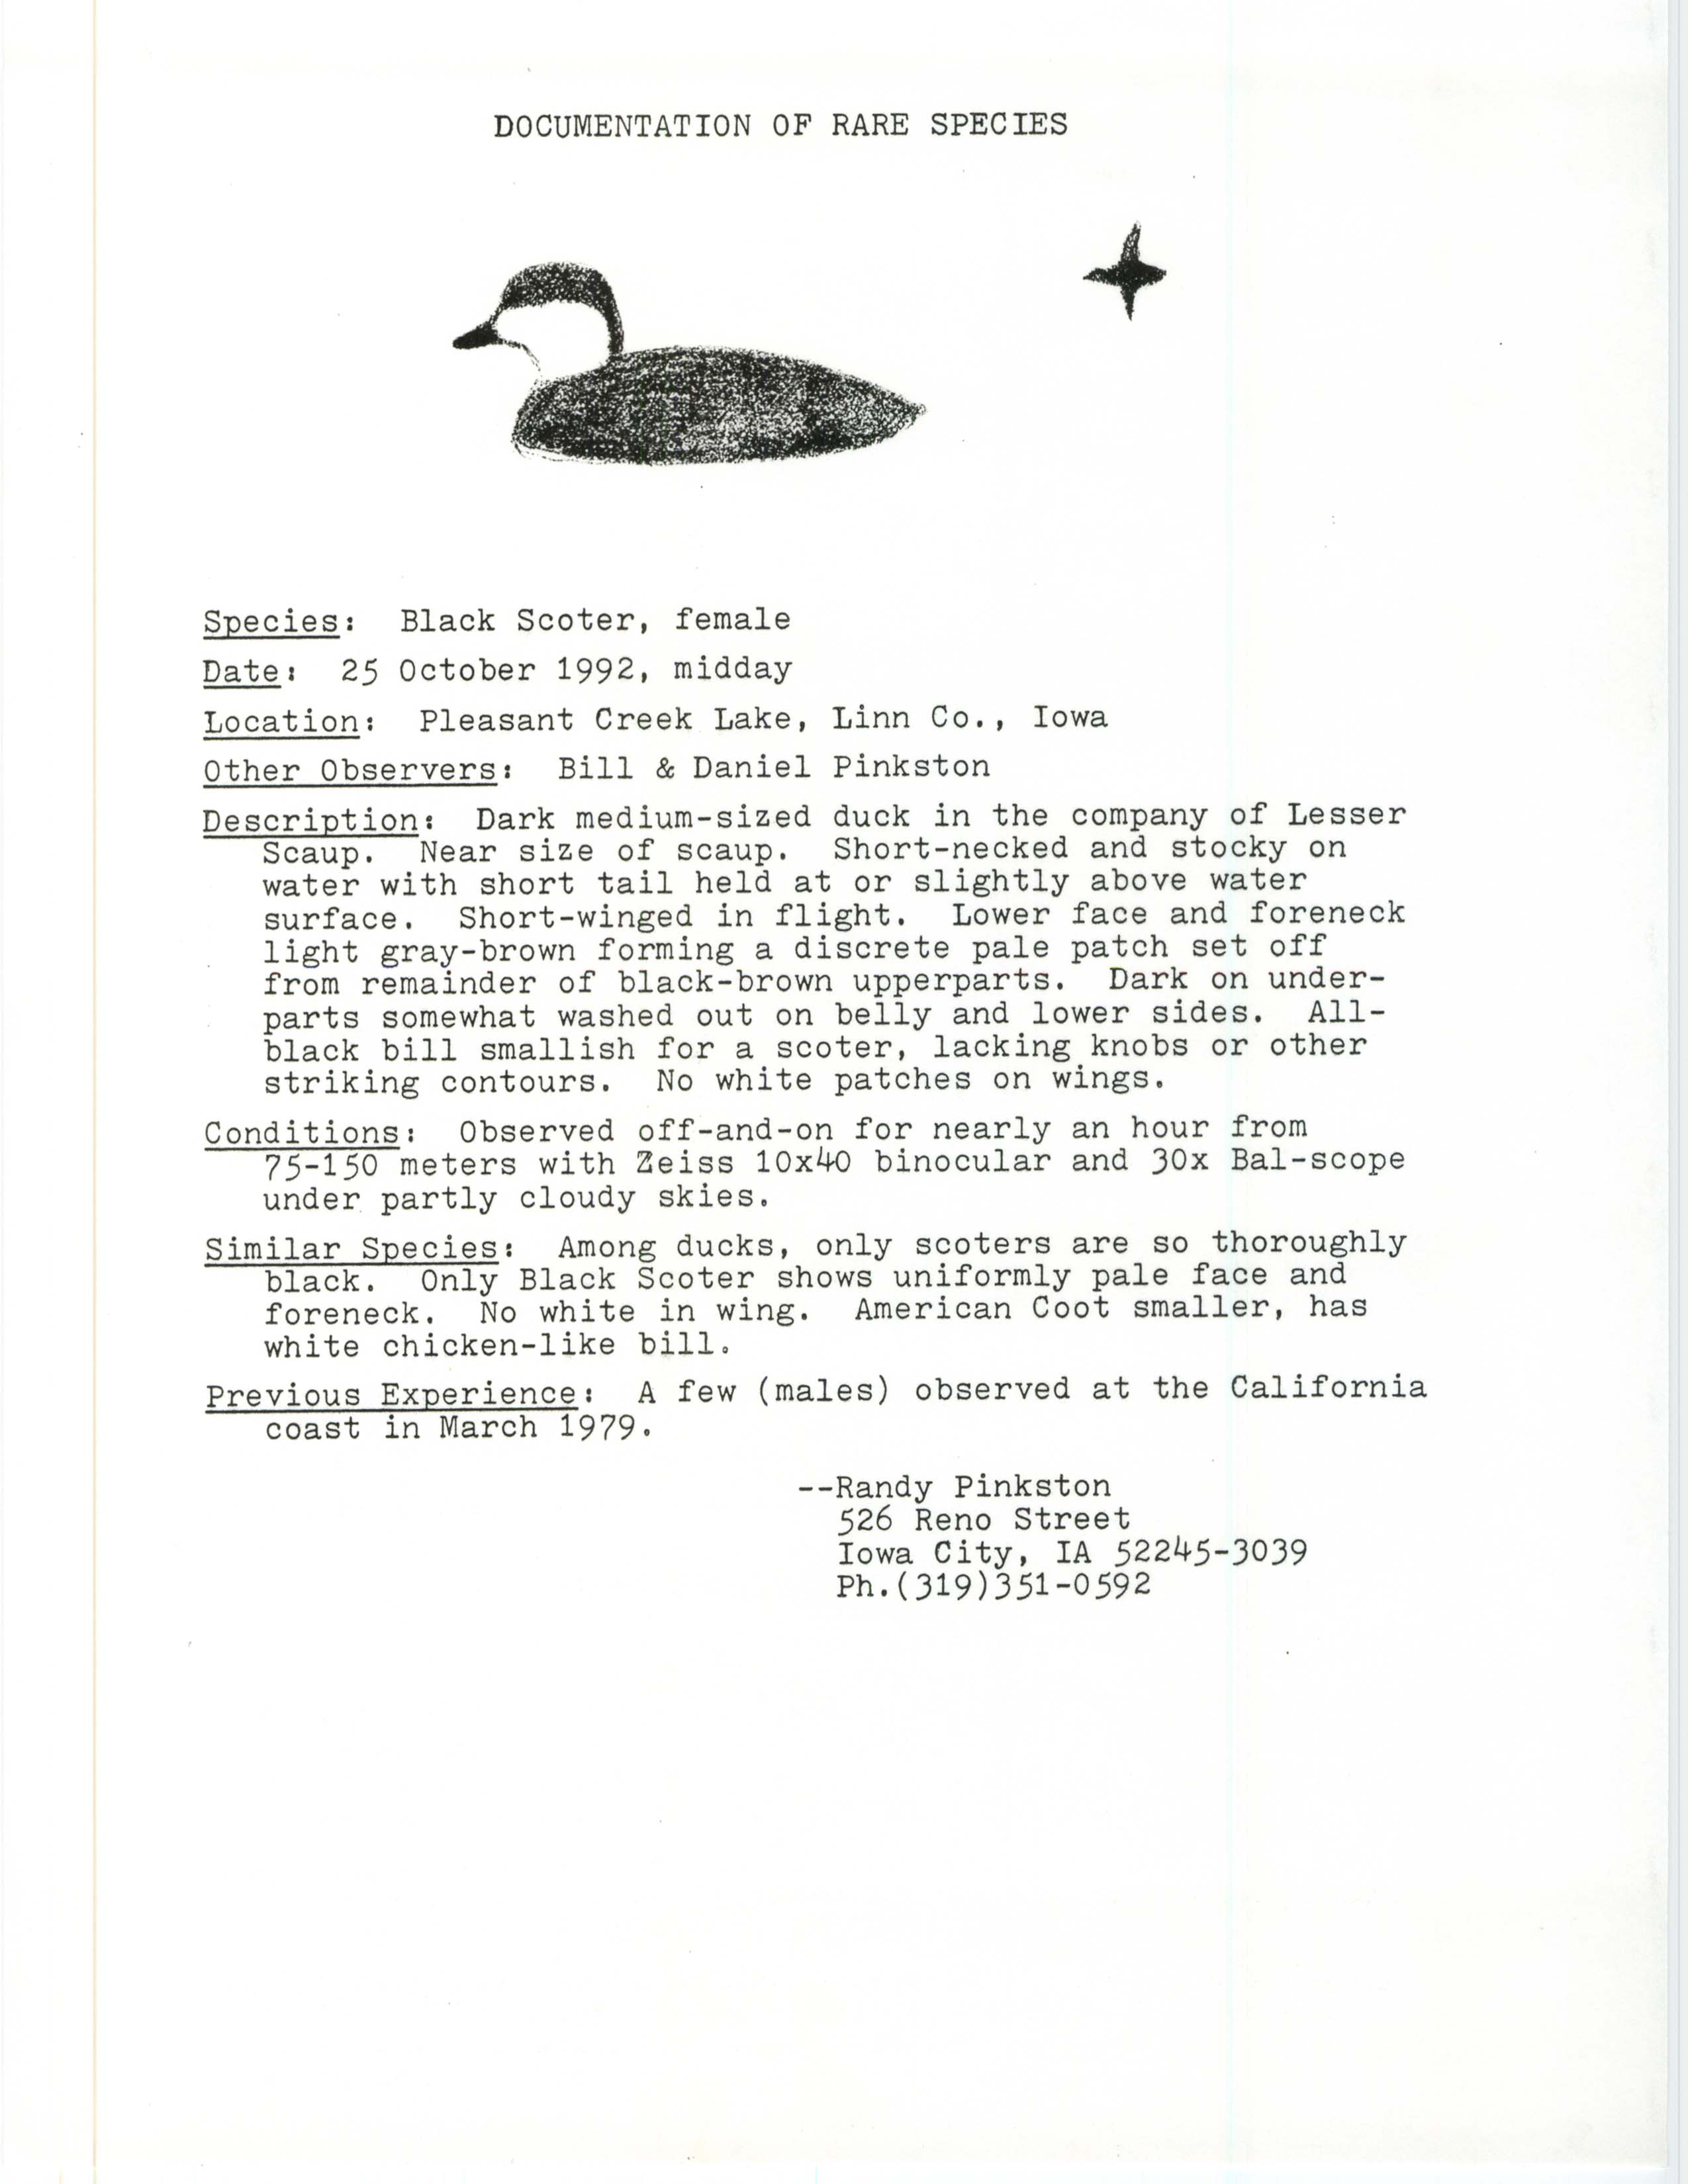 Rare bird documentation form for Black Scoter at Pleasant Creek Lake, 1992